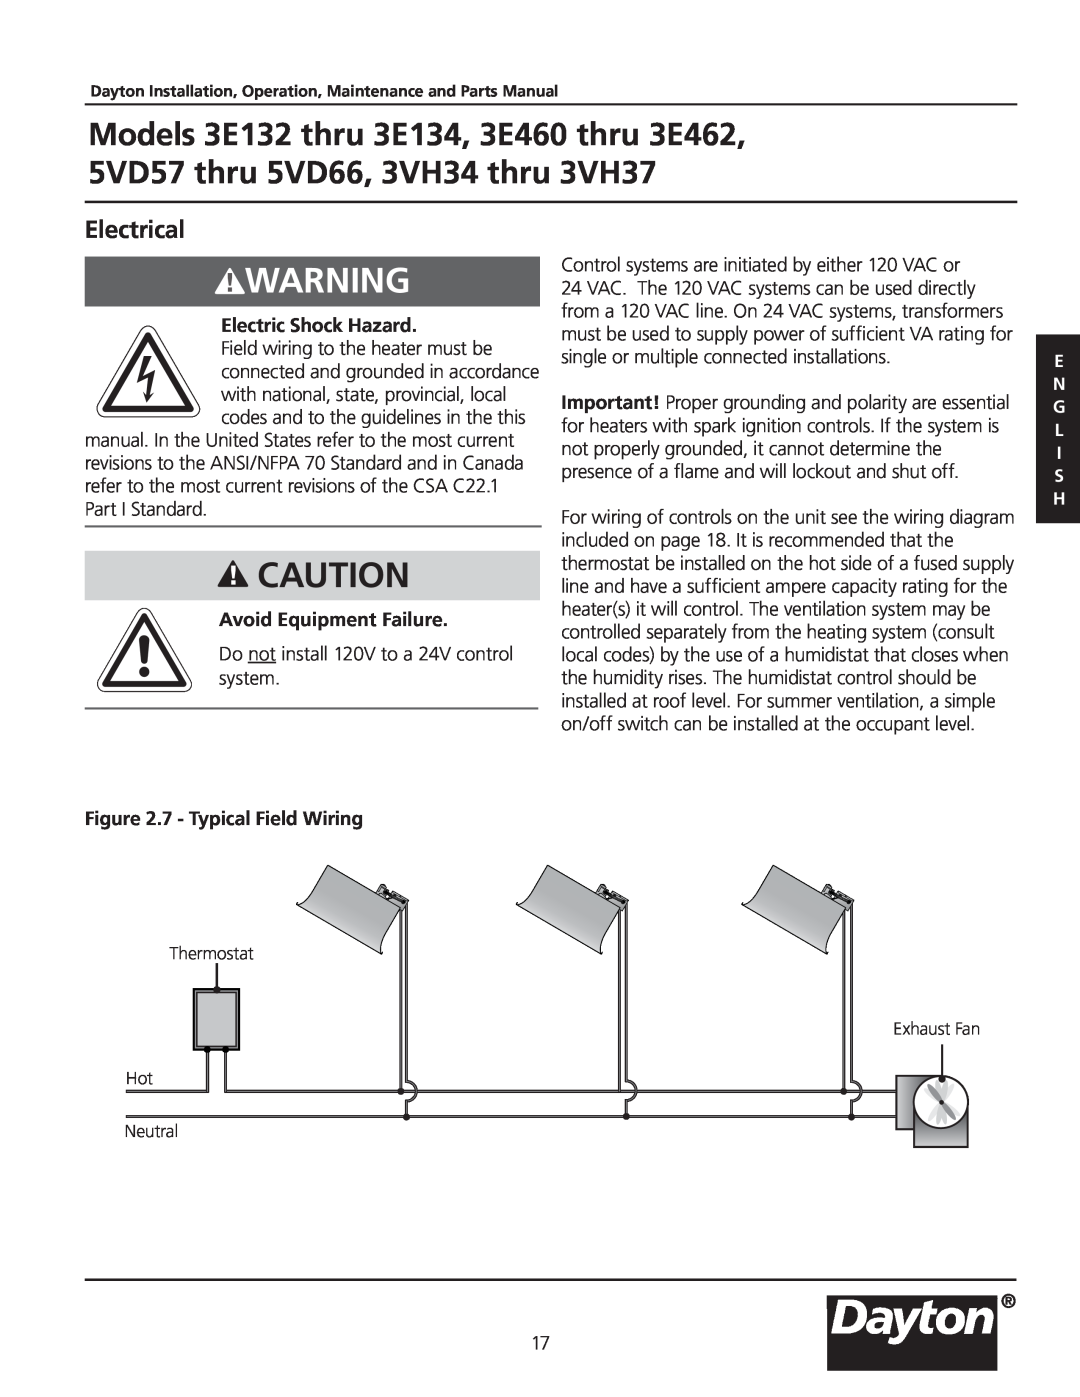 Dayton 3.00E+134, 3VH34, 3VH37, 5VD57 Electrical, Electric Shock Hazard, Avoid Equipment Failure, 7 - Typical Field Wiring 